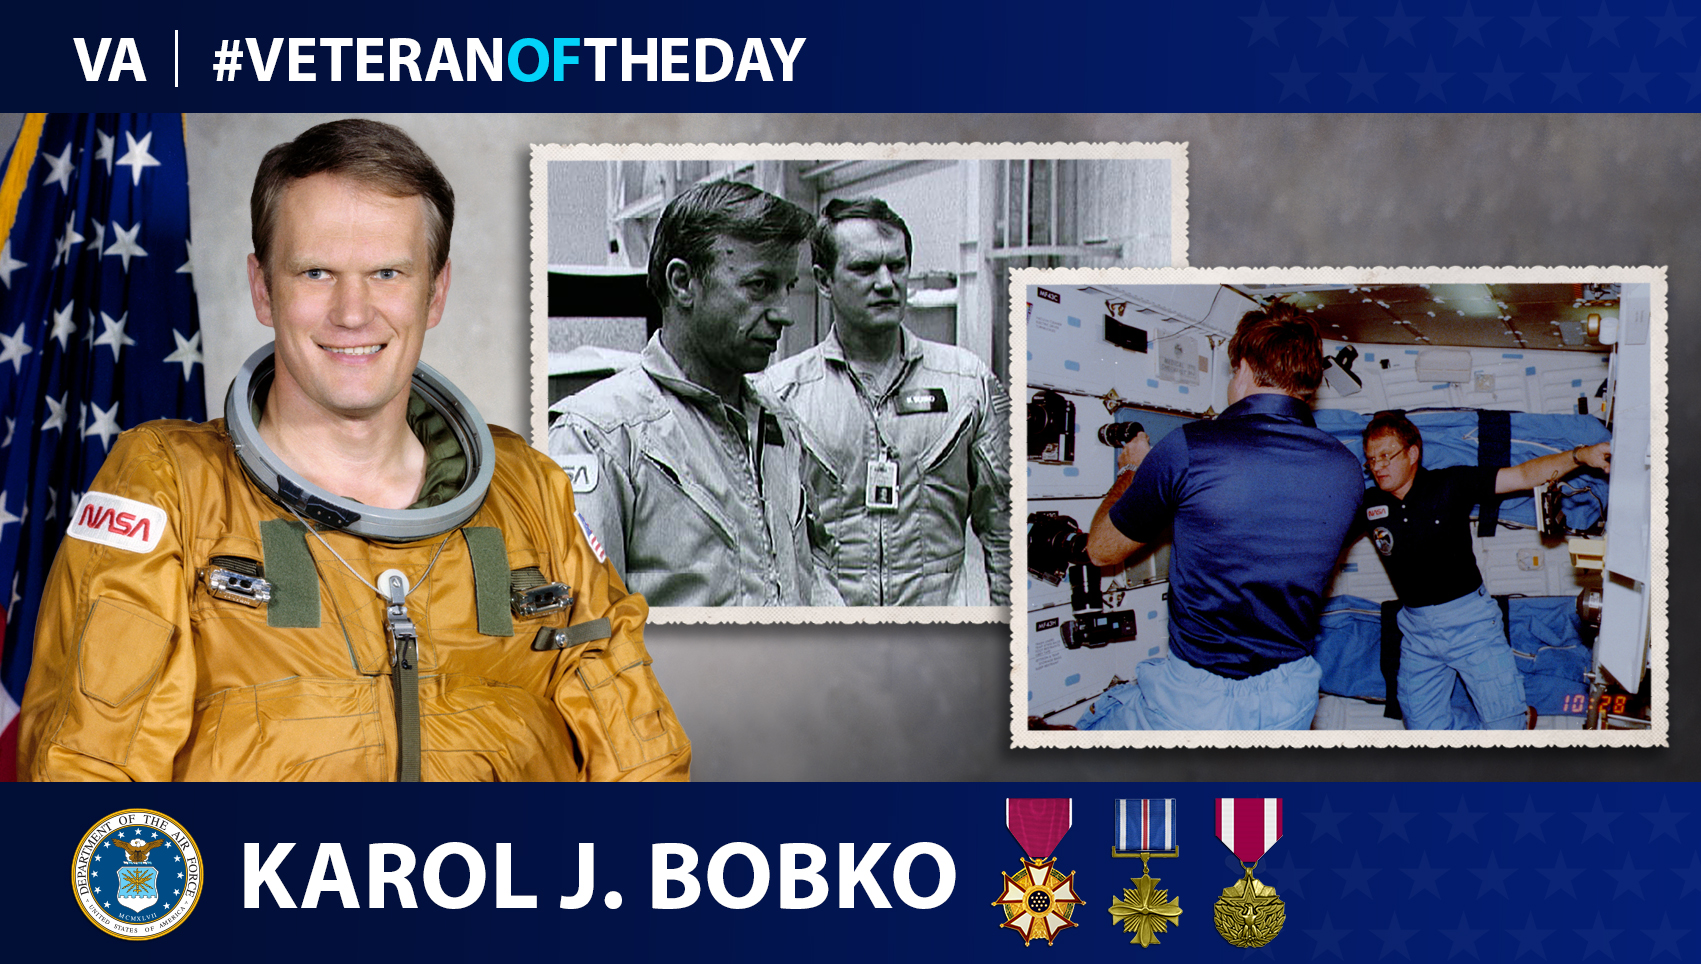 Air Force Veteran Karol J. Bobko is today’s Veteran of the Day.